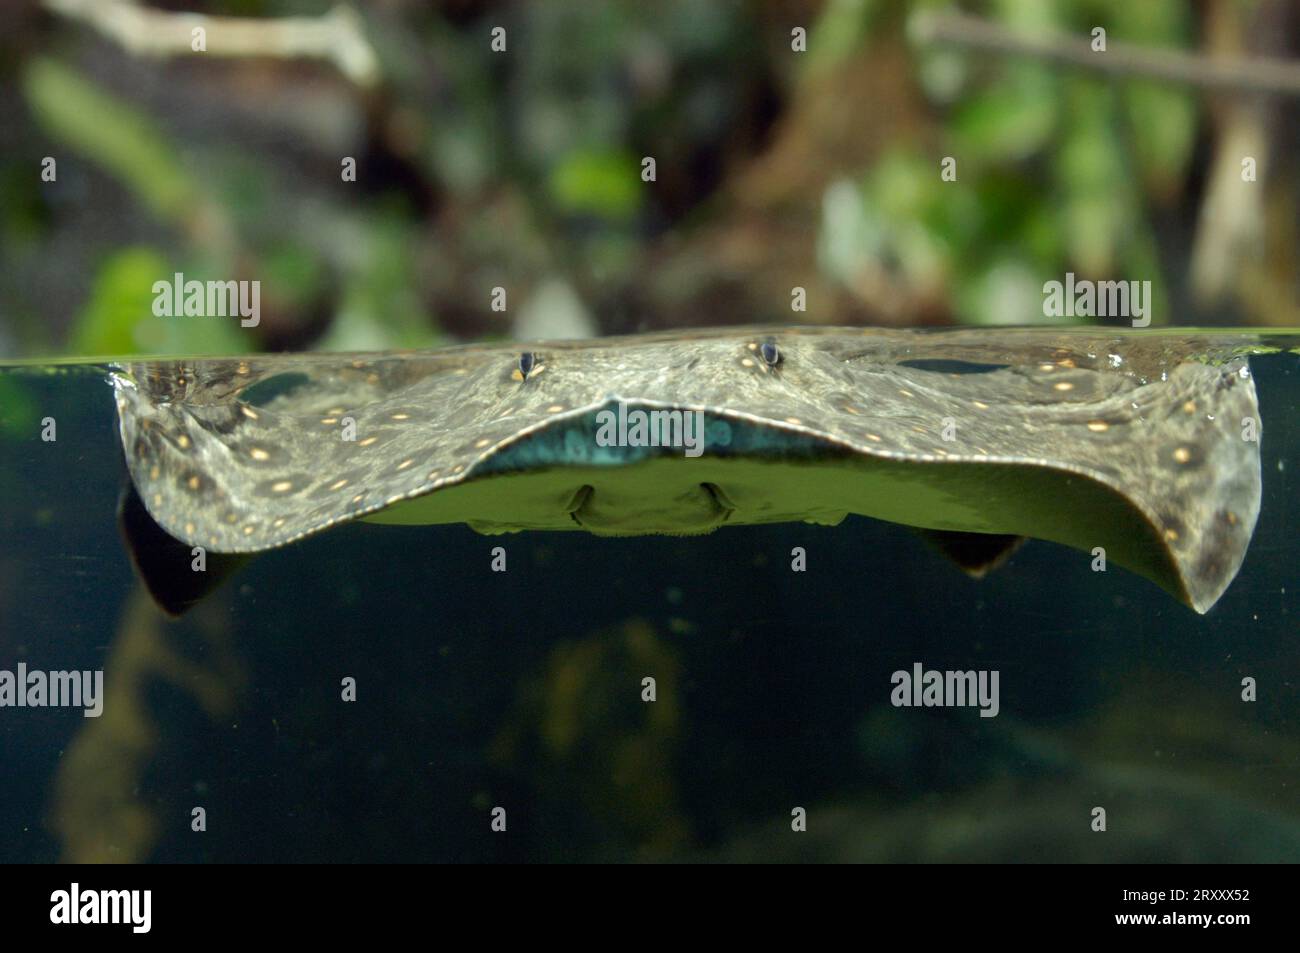 Ocellate river stingray (Potamotrygon motoro), freshwater stingray, freshwater stingray Stock Photo